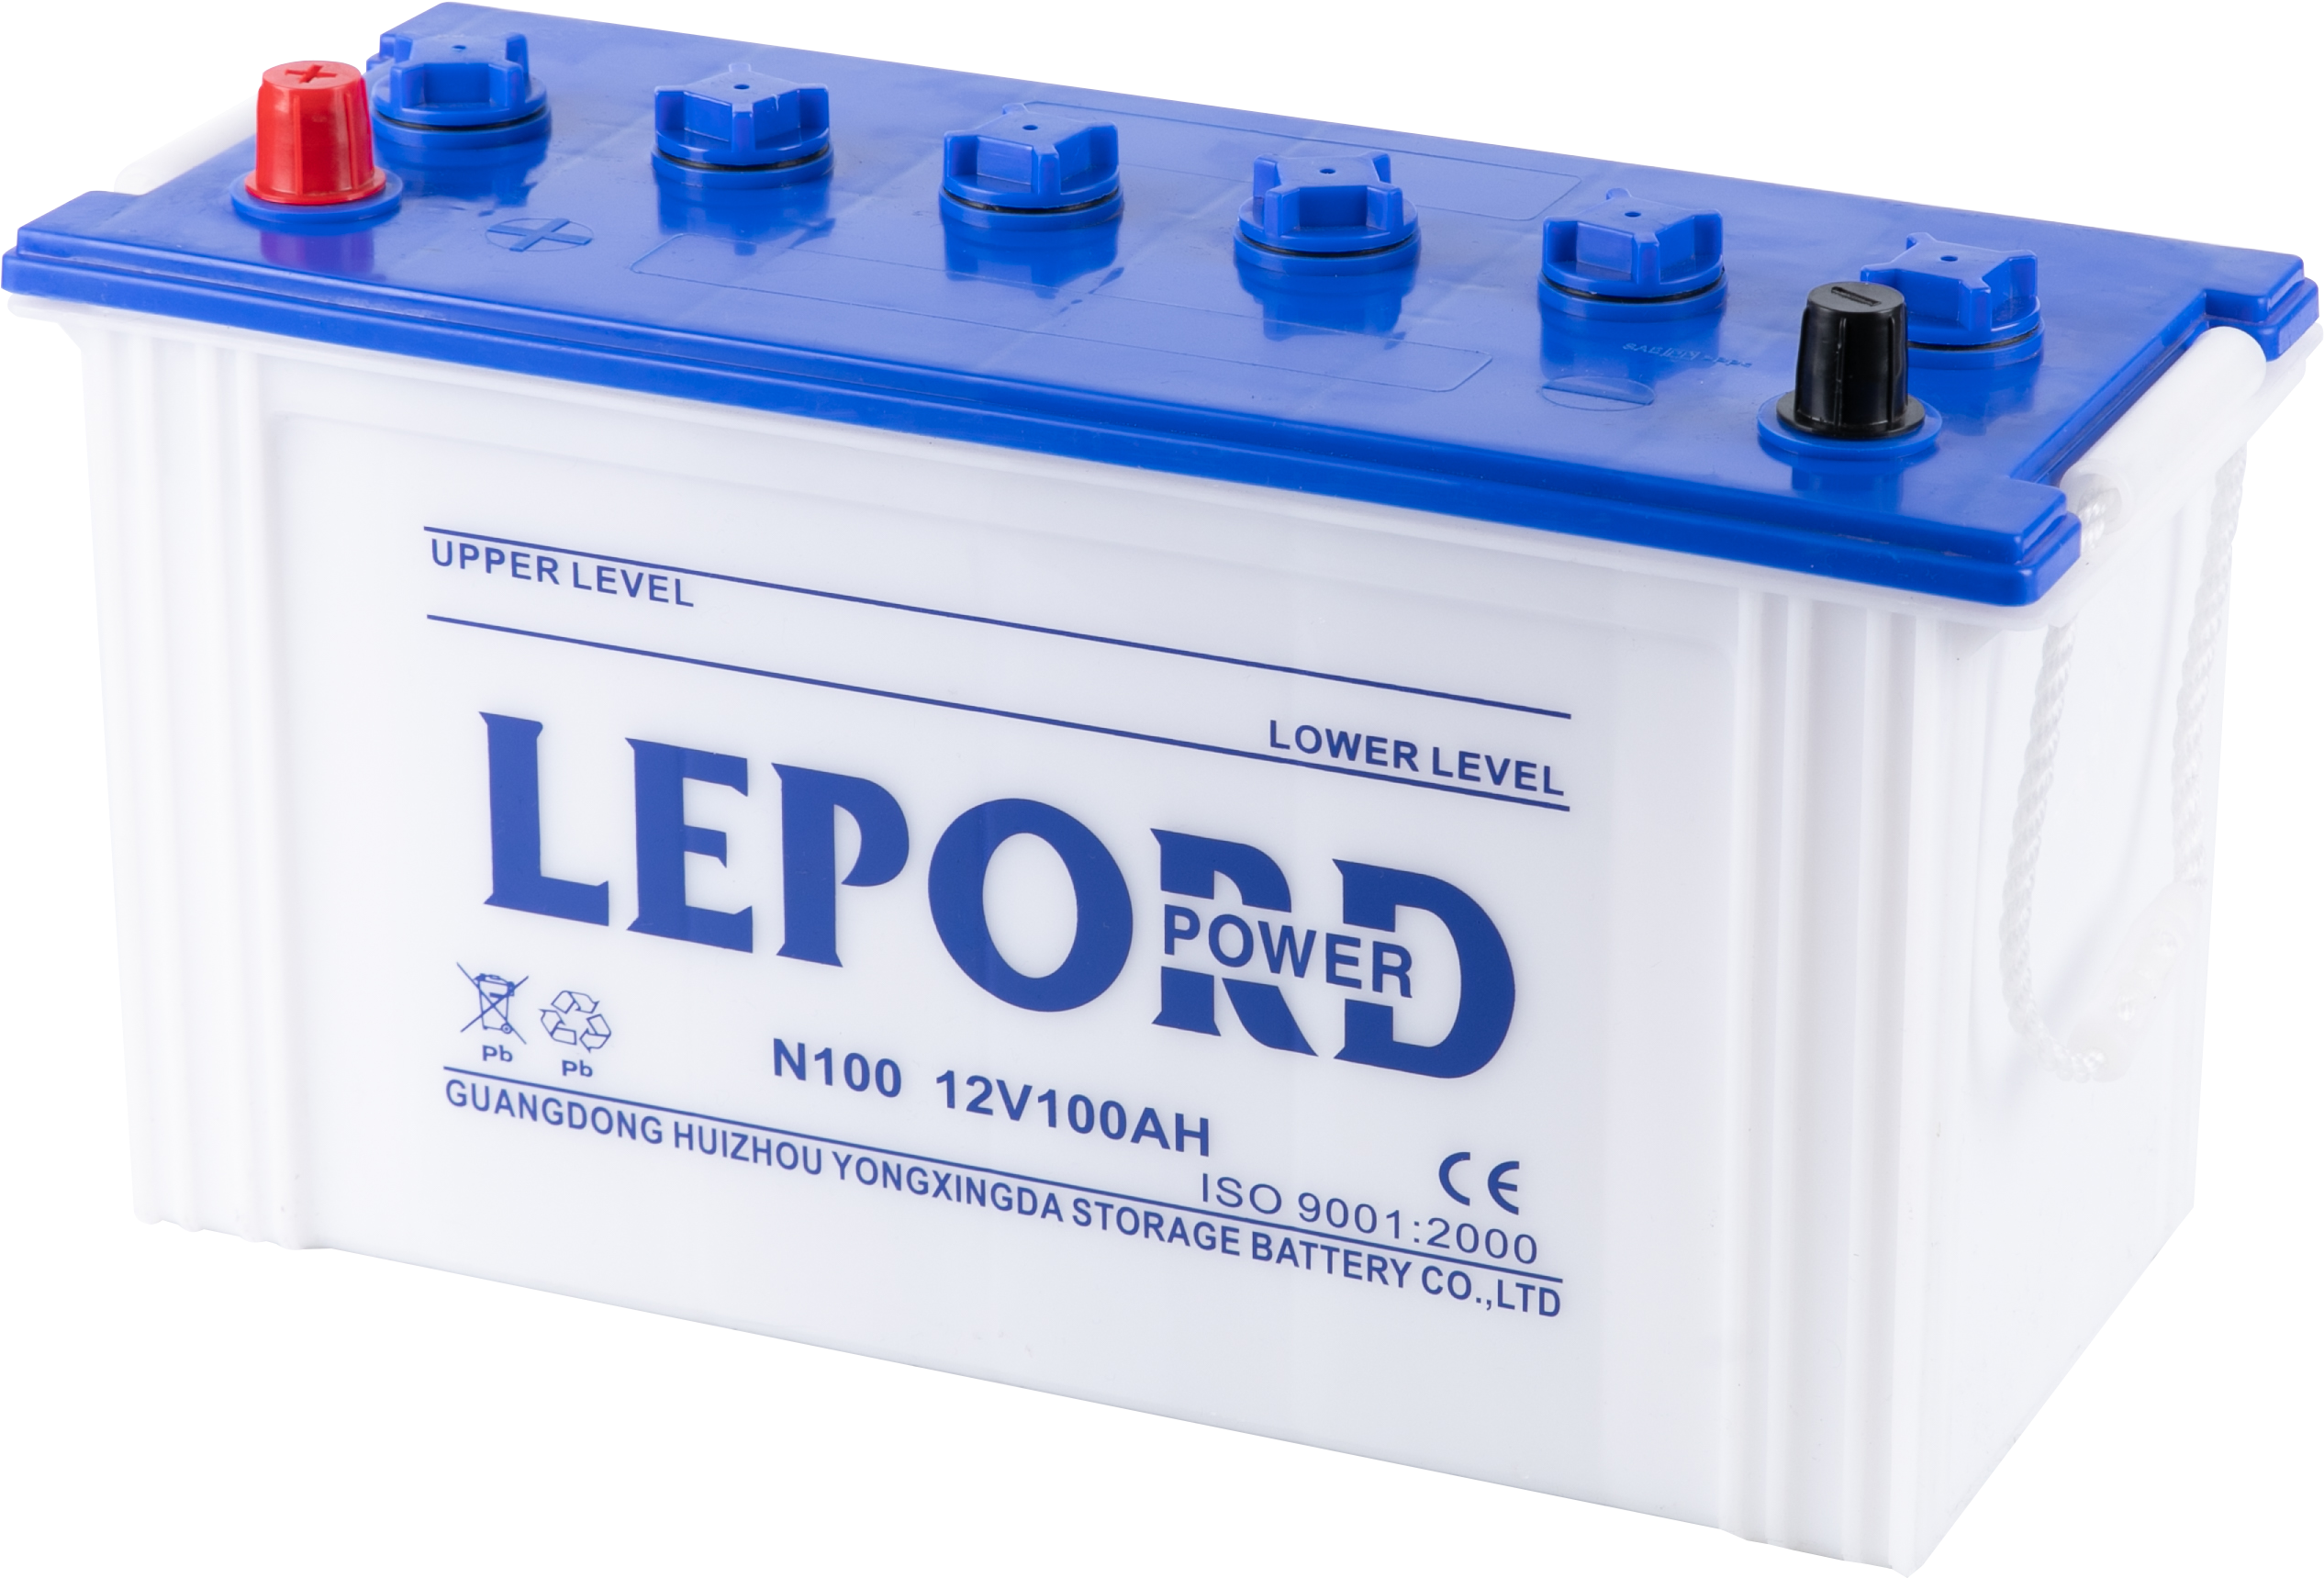 L E P O R D12 V100 Ah Sealed Lead Acid Battery